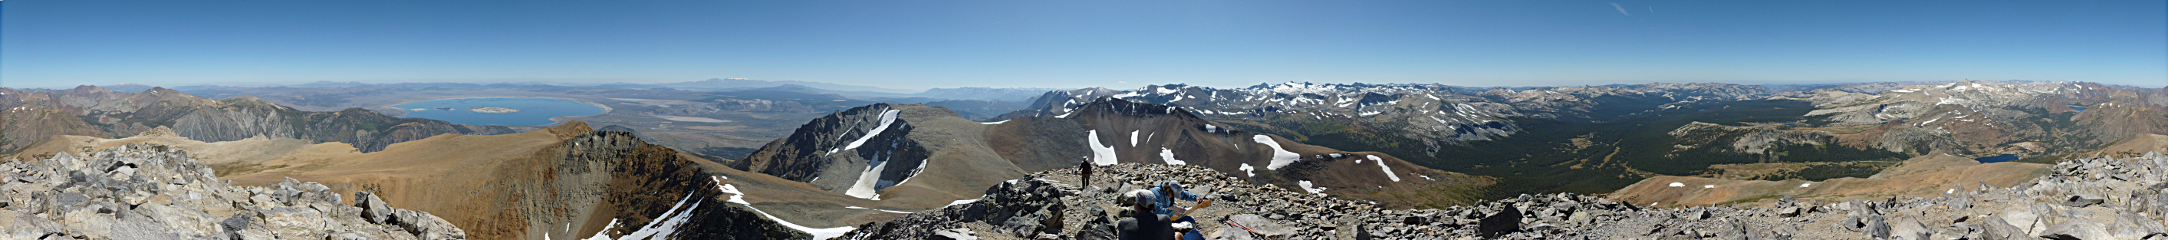 Full 360 degree panorama from top of Mt. Dana.